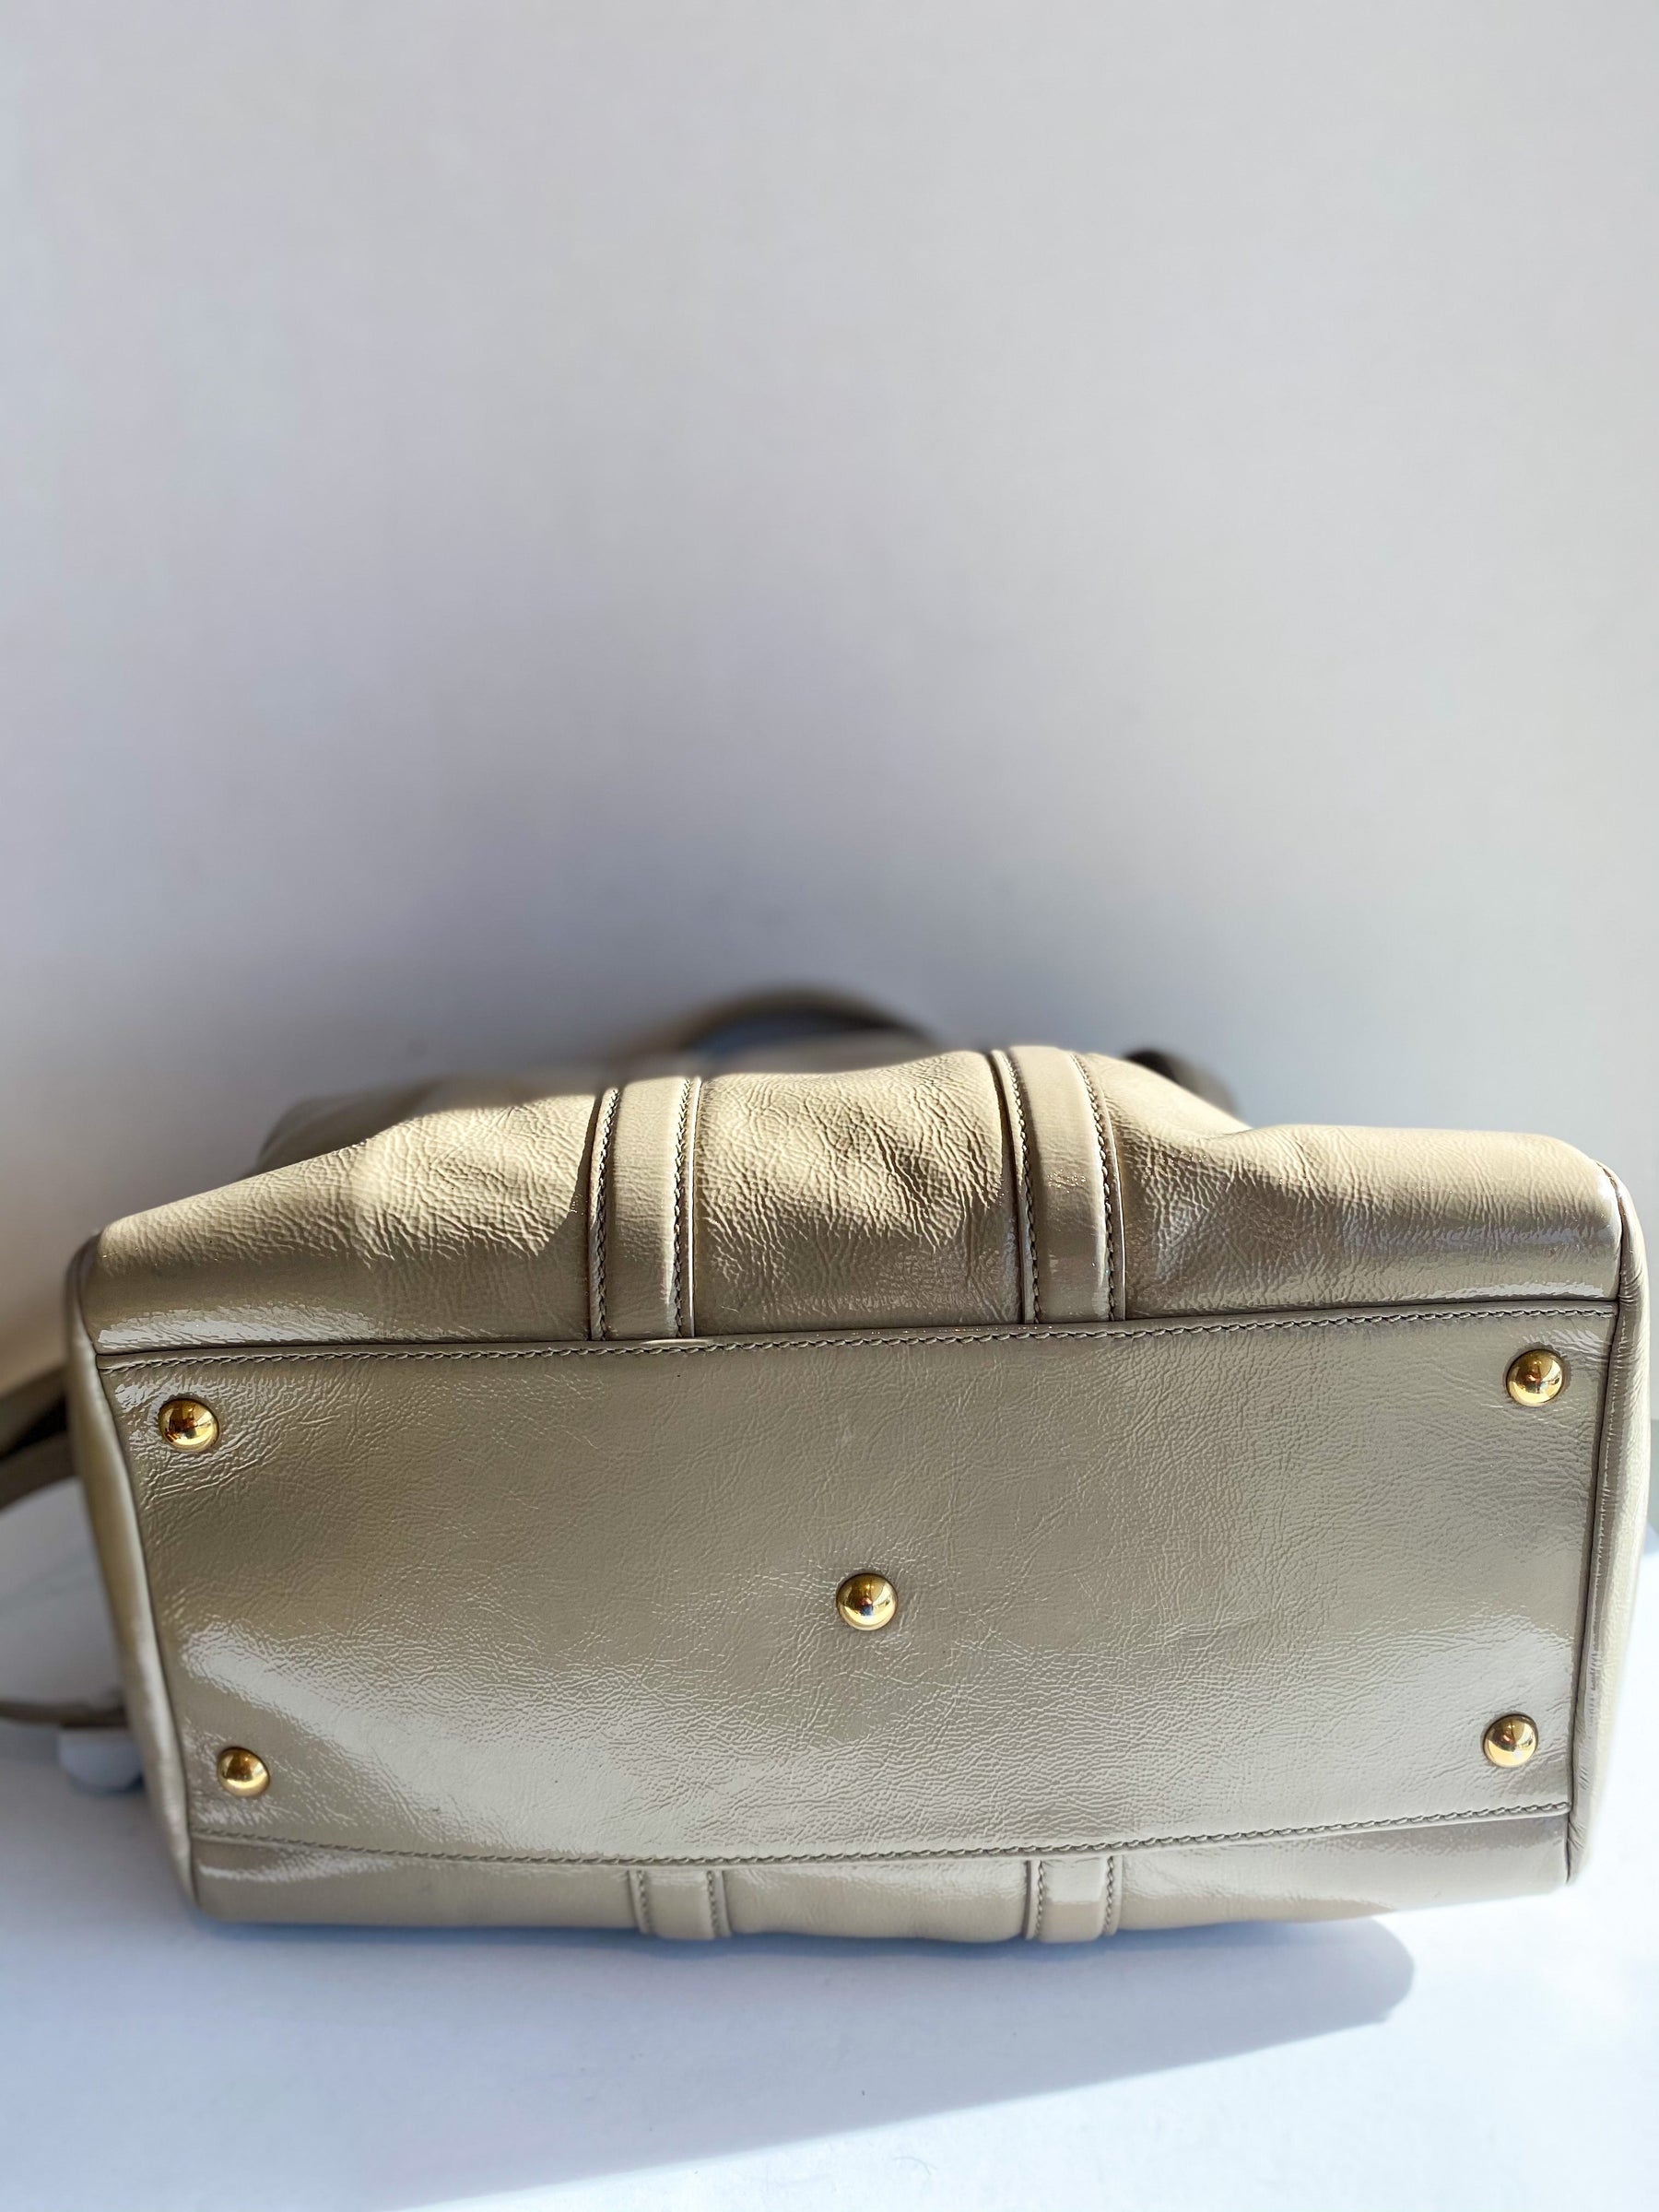 Yves Saint Laurent Patent Leather Bag